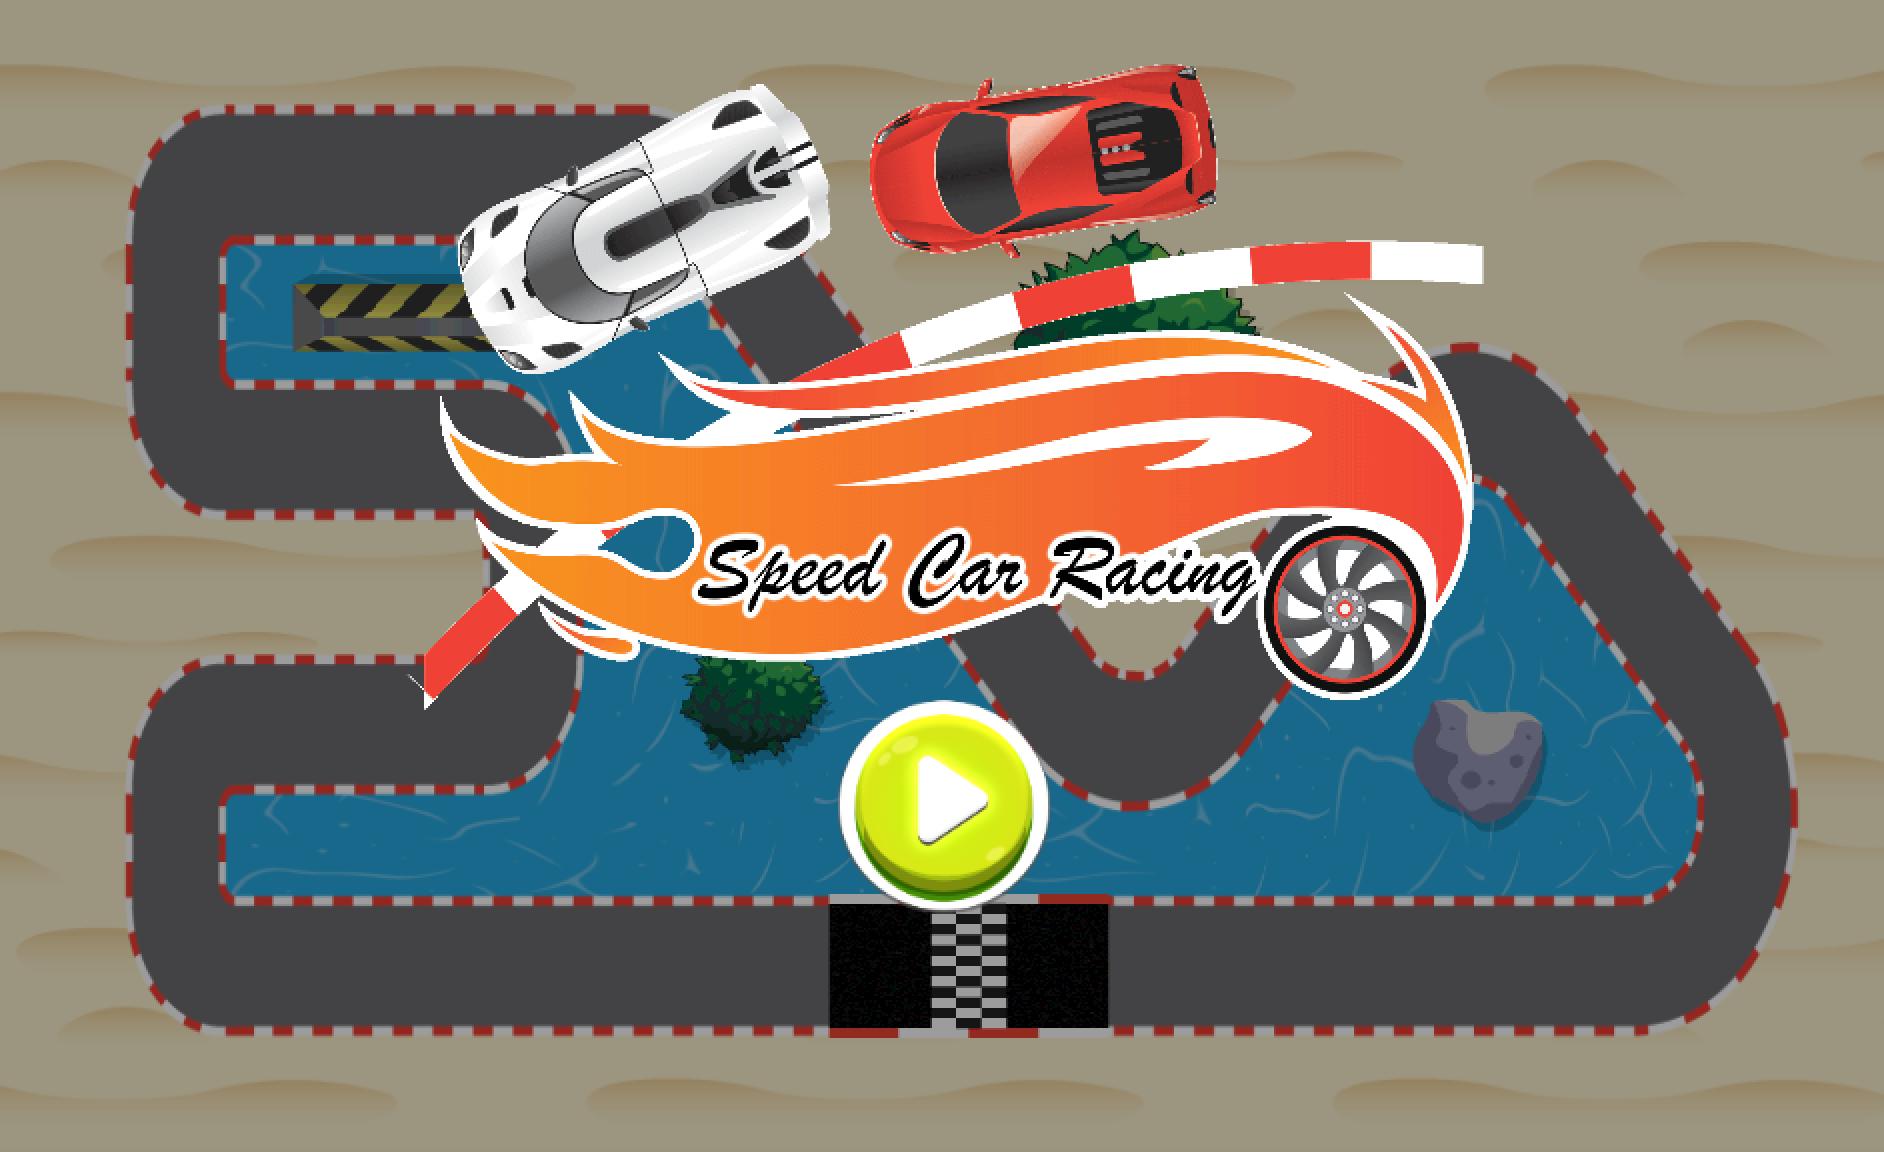 Cars speed racing. Lightning Speed car Racing игра. Картинг плакат. Знак вызов на гонках. Line Speed Race poster.